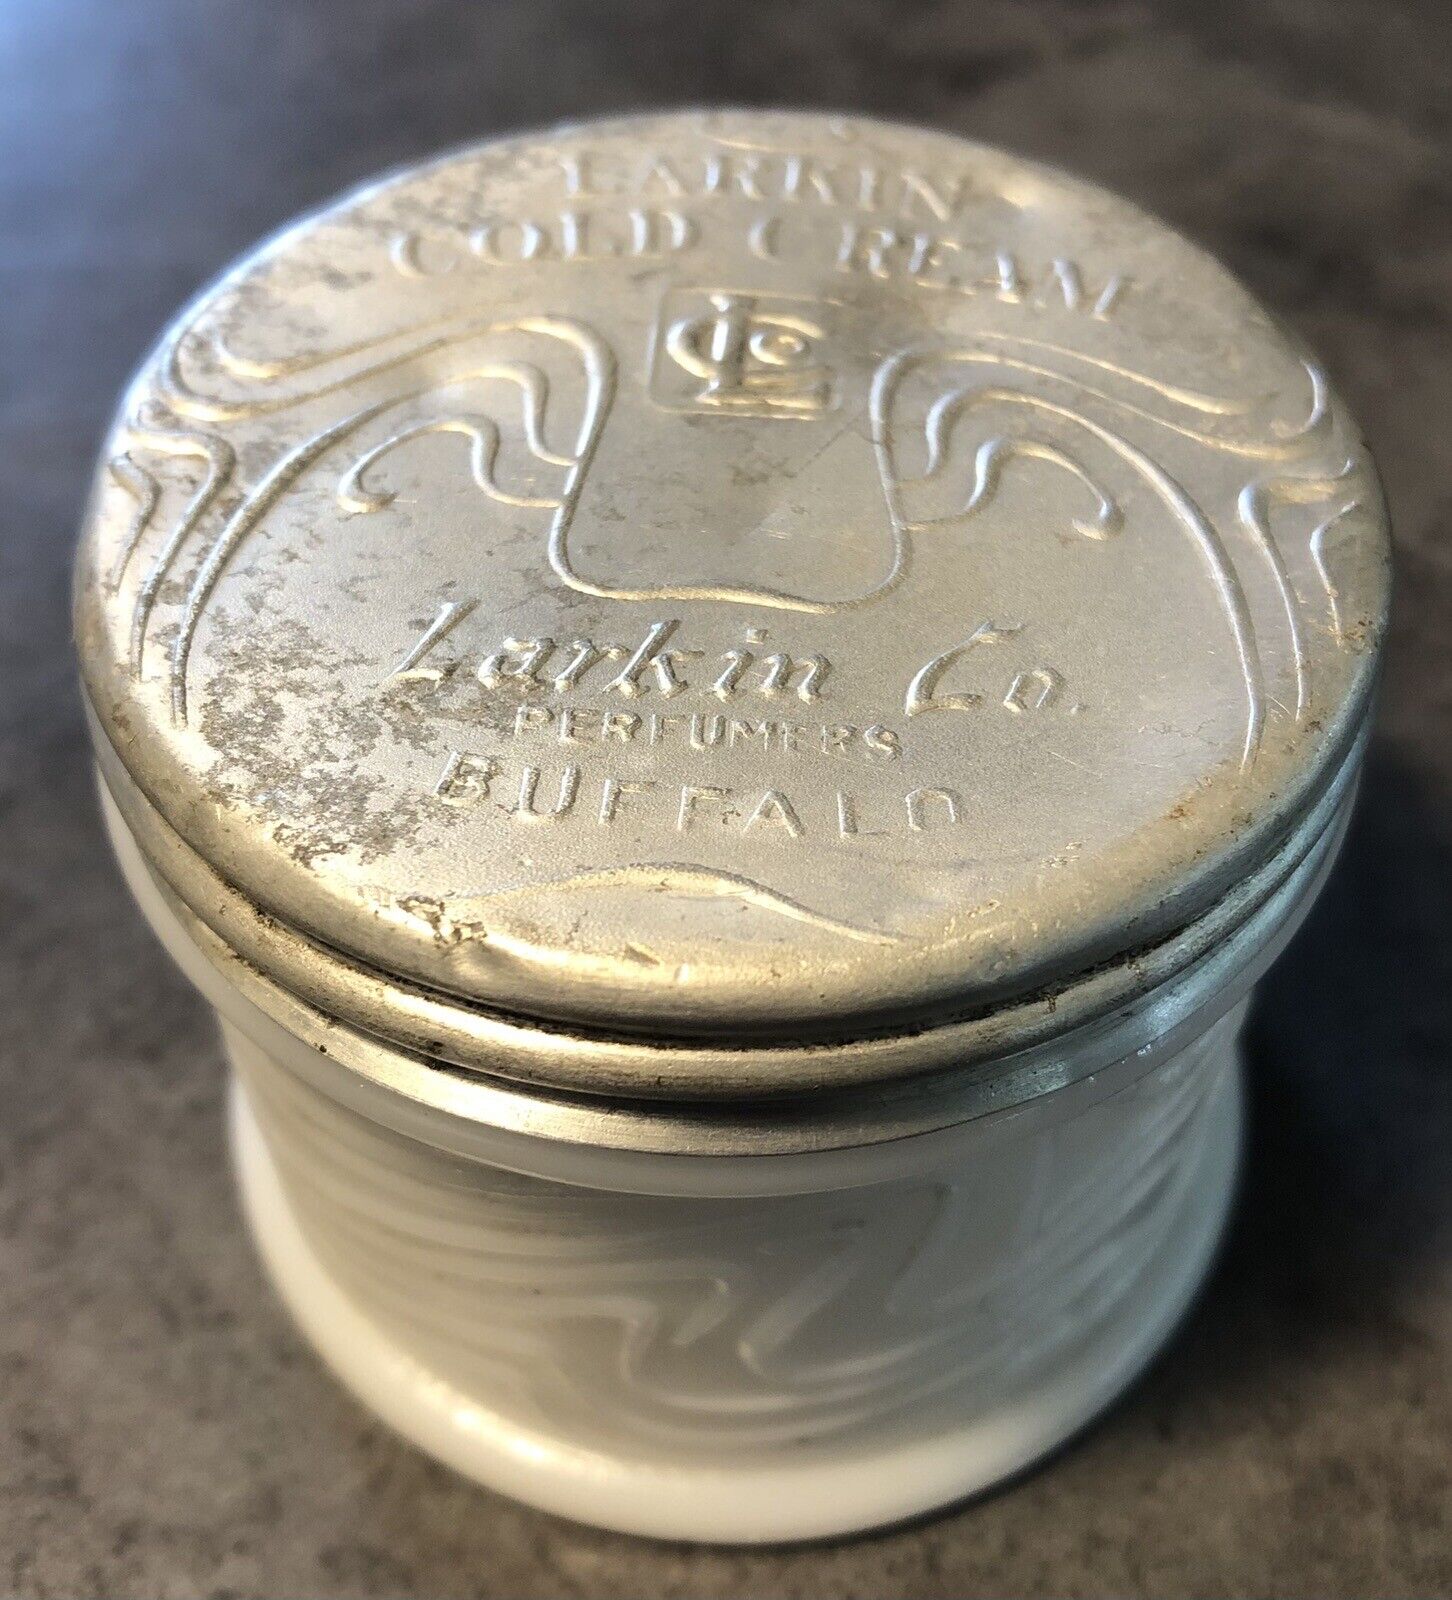 Vintage Larkin Cold Cream Jar with Lid Buffalo, NY